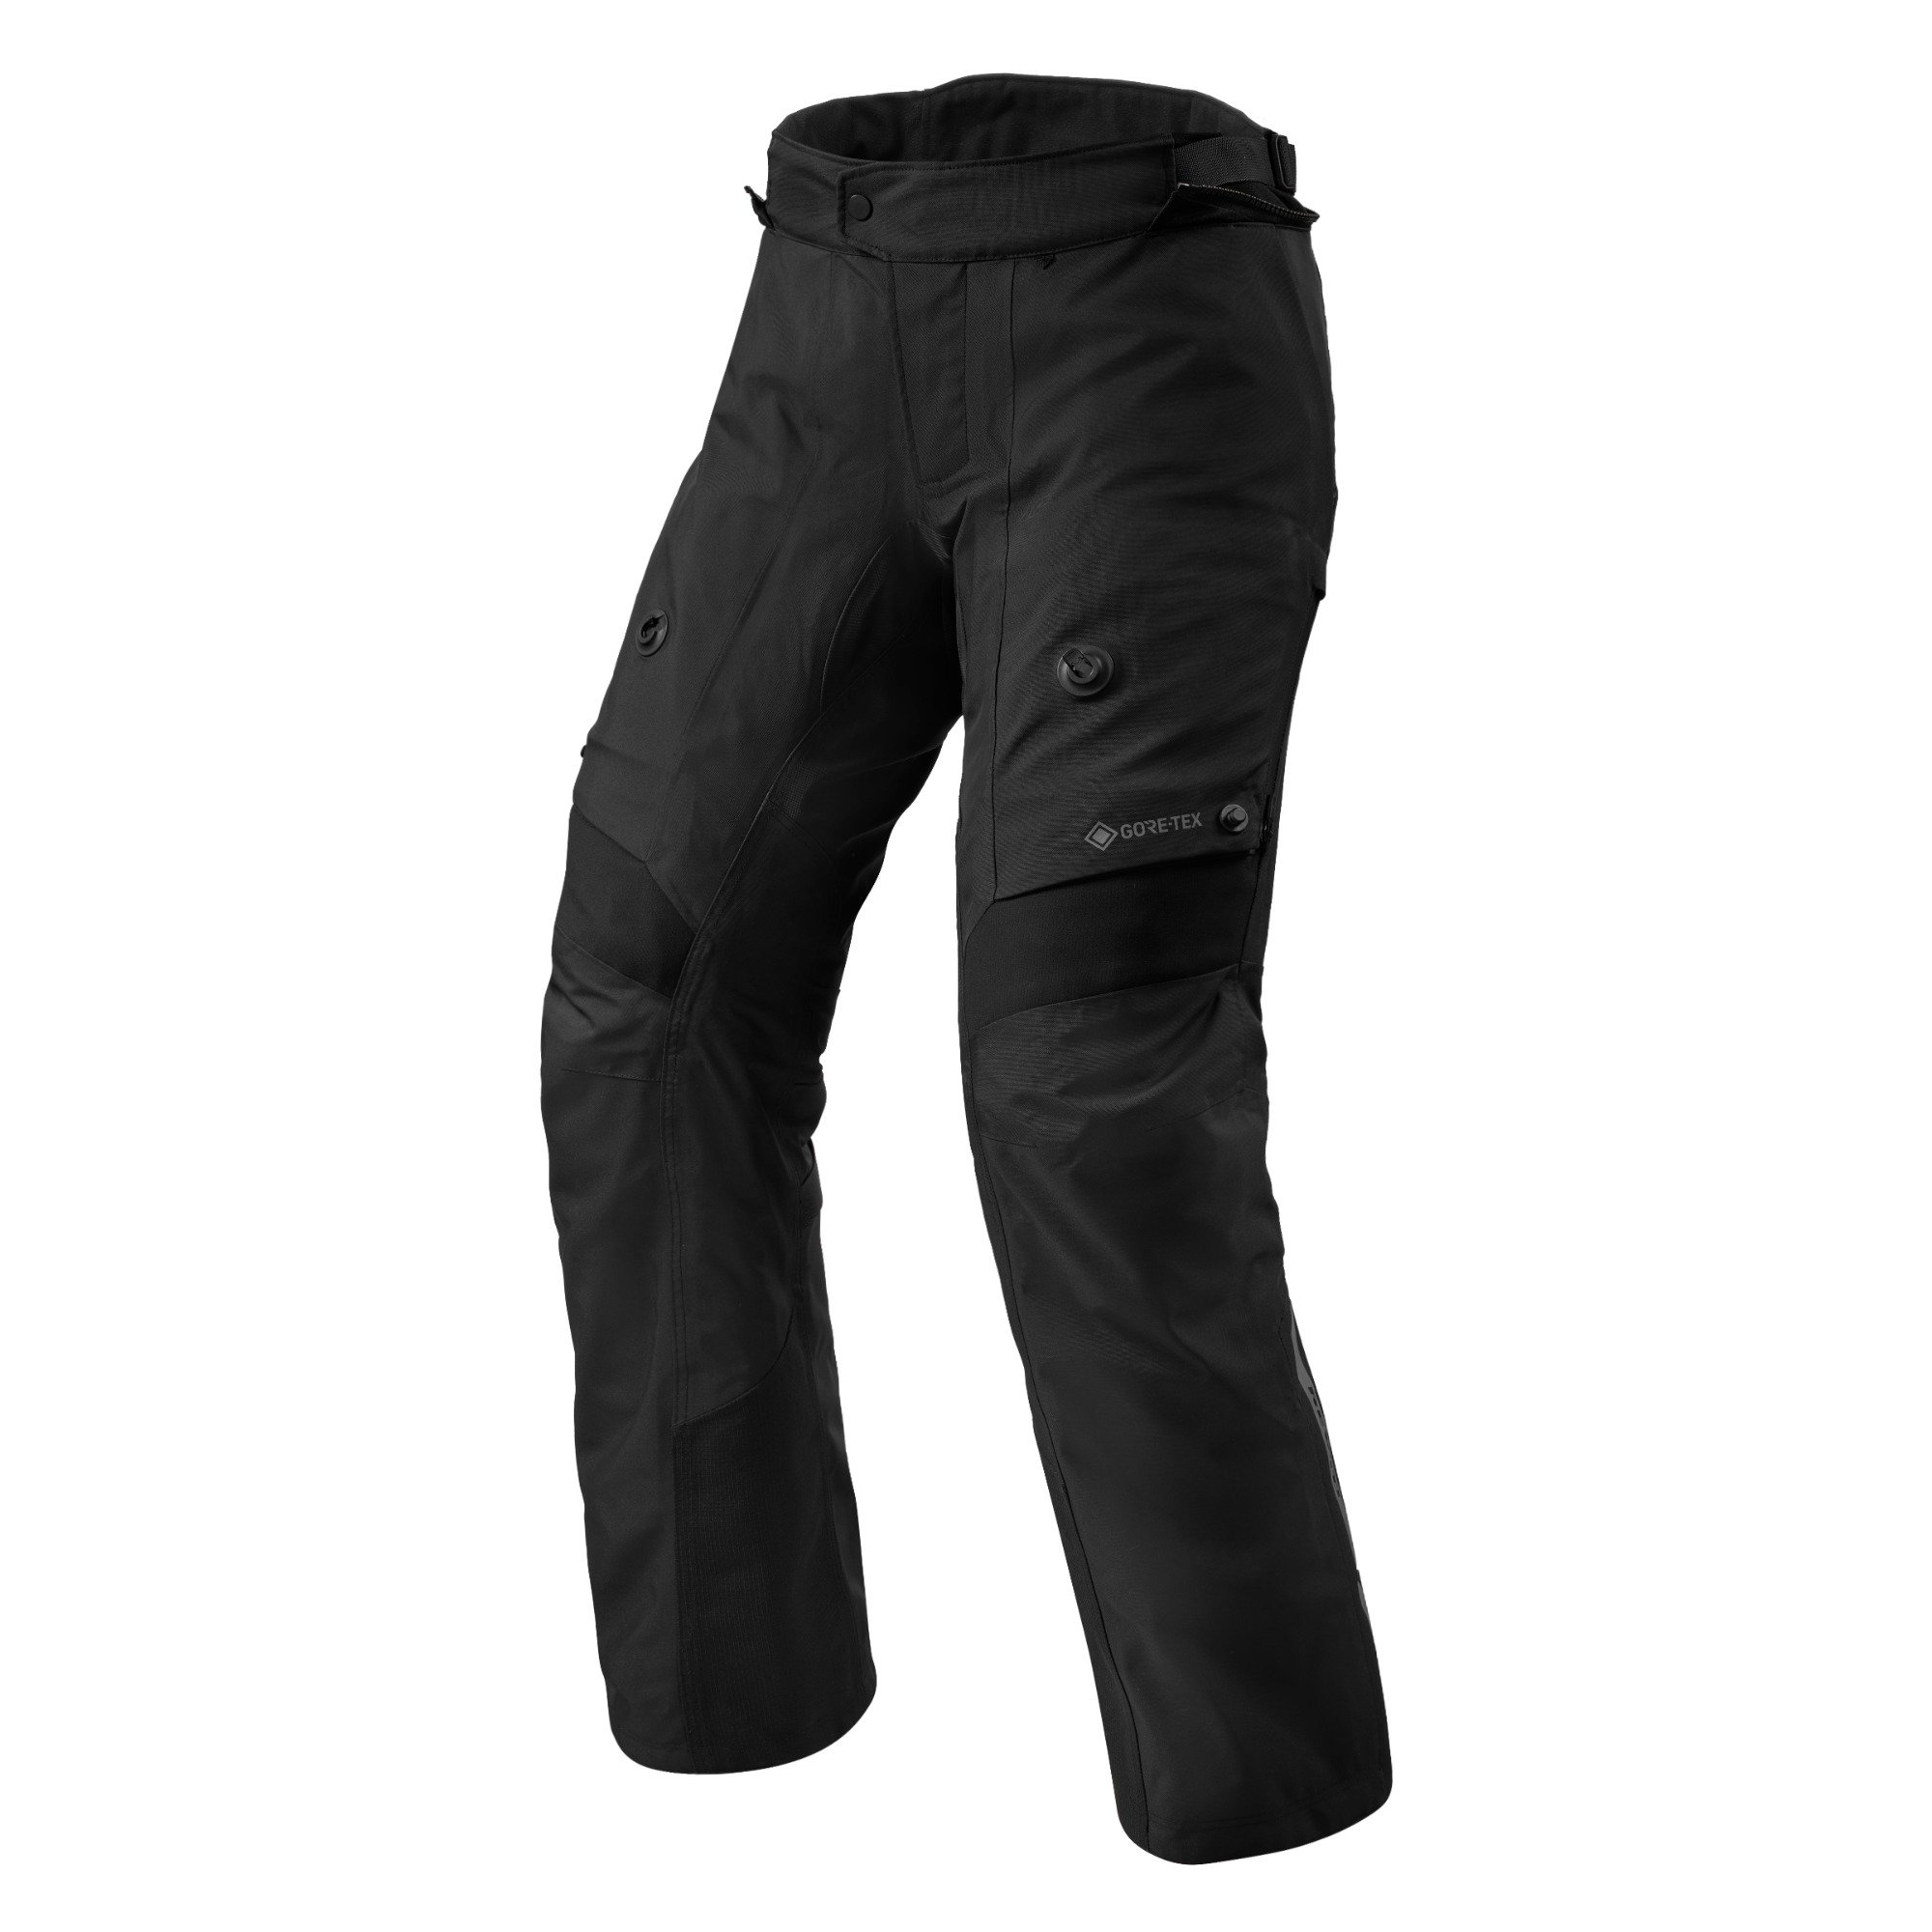 Image of REV'IT! Pants Poseidon 3 GTX Black Short Motorcycle Pants Talla M